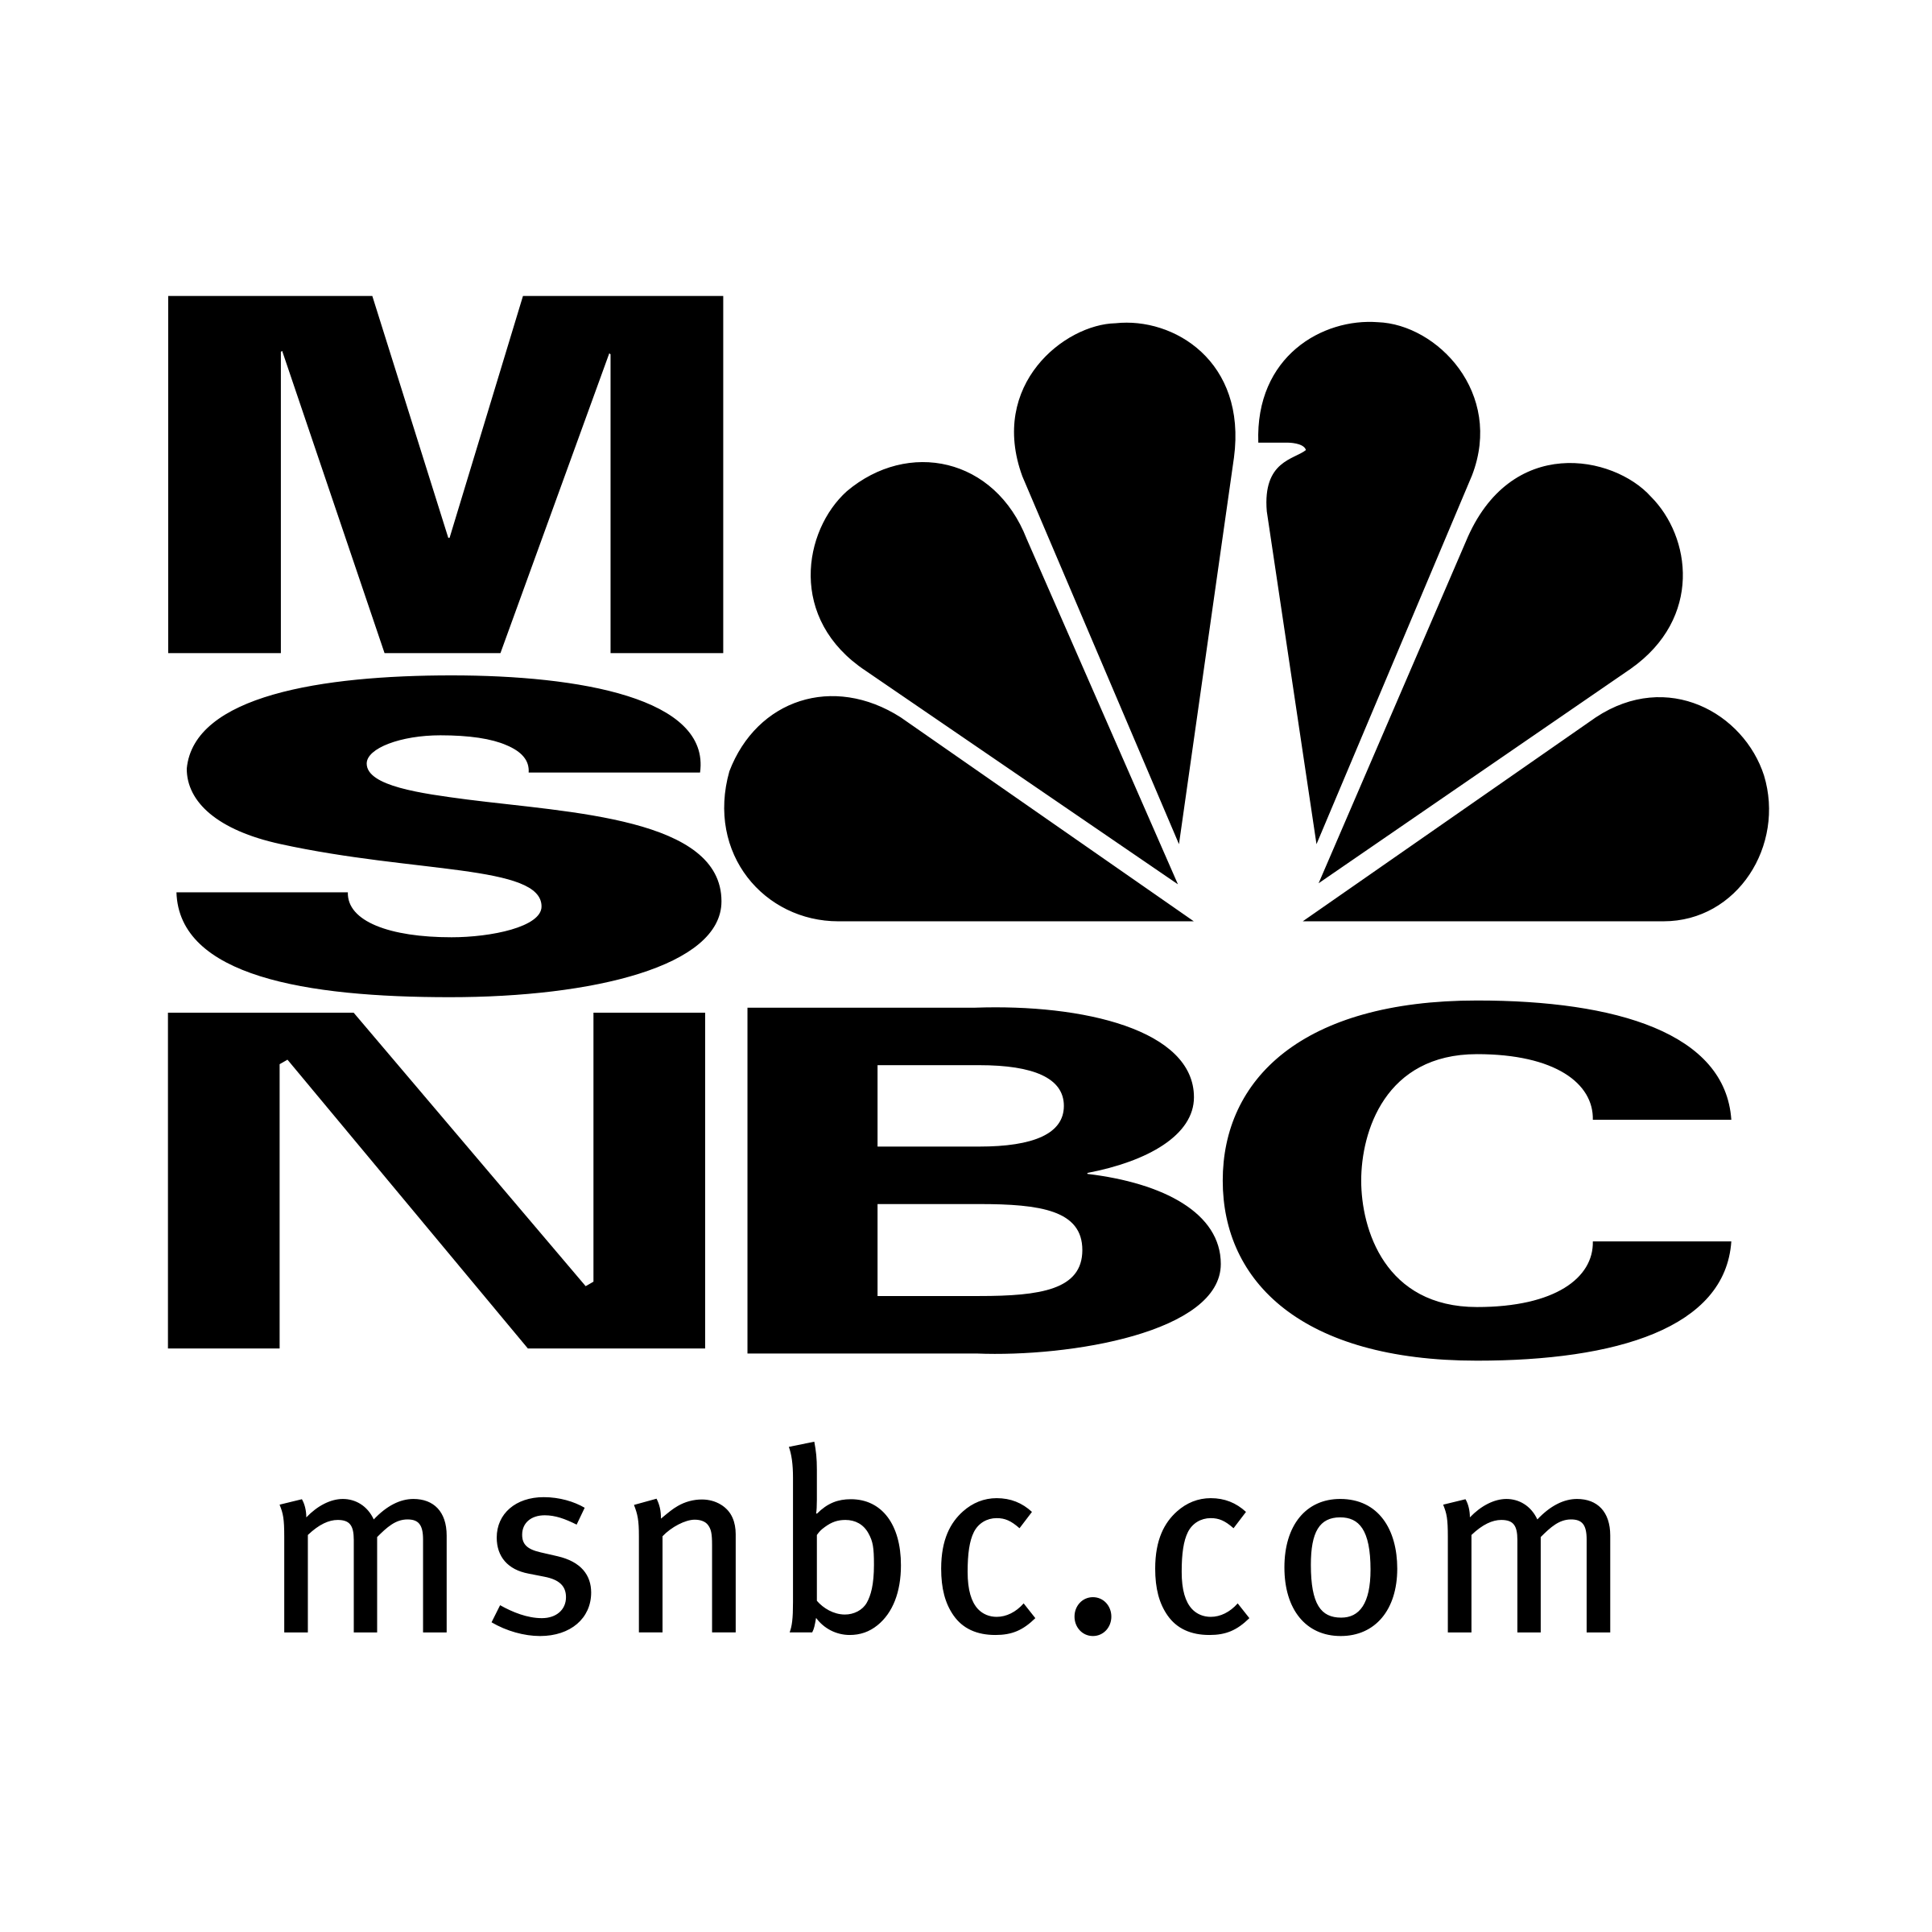 MSNBC Logo - MSNBC Logo PNG Transparent & SVG Vector - Freebie Supply